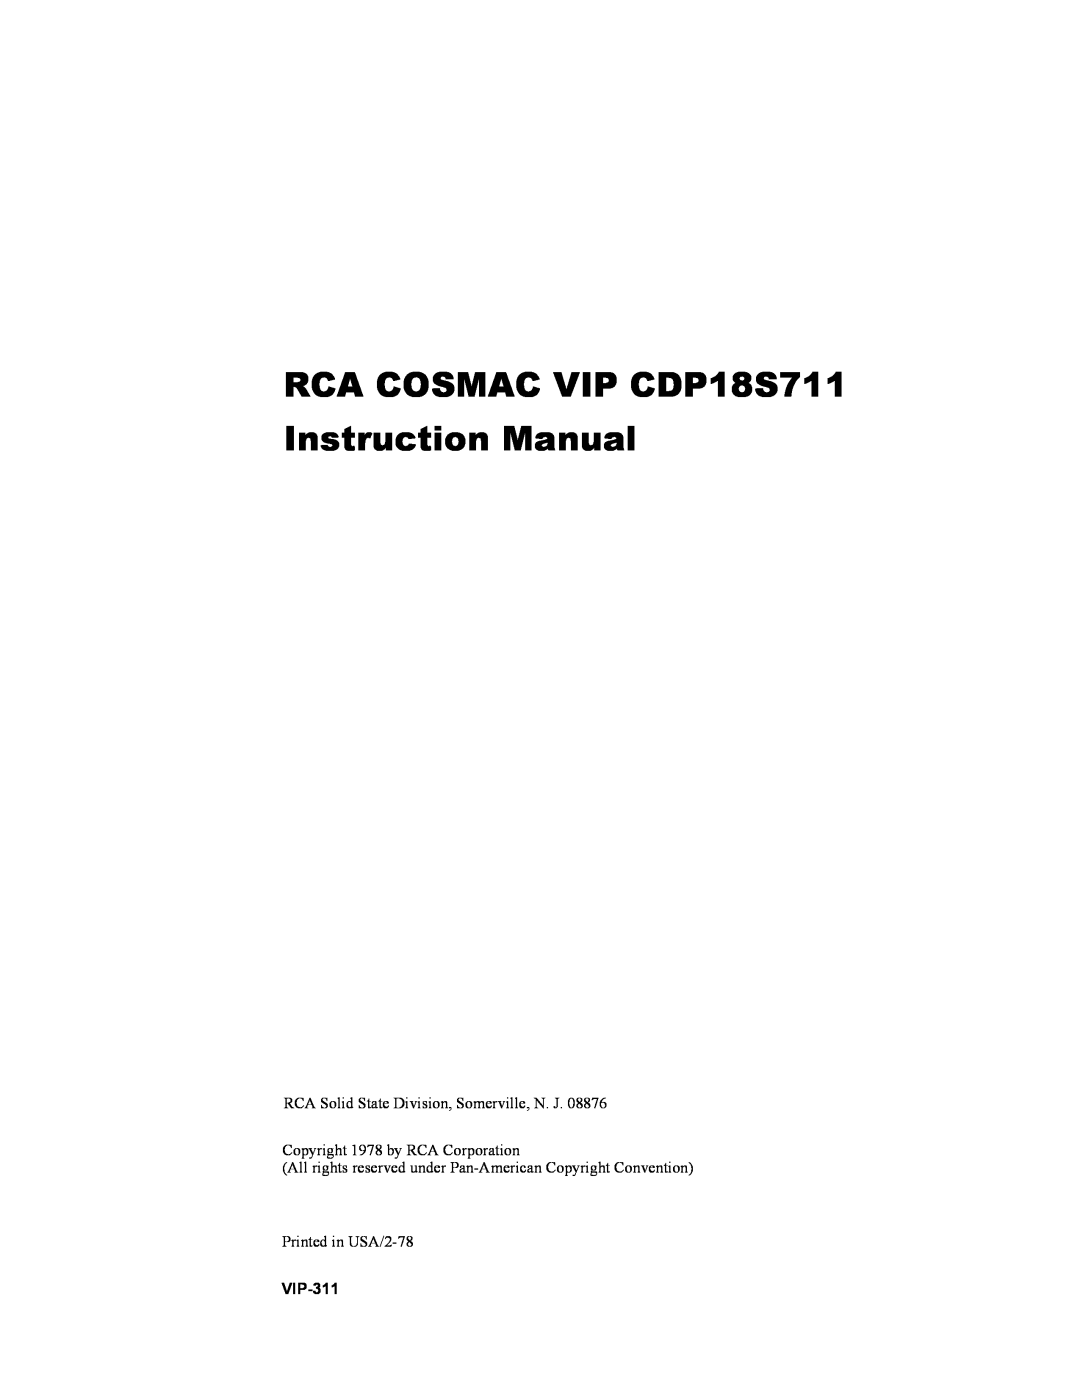 RCA manual RCA COSMAC VIP CDP18S711 Instruction Manual, VIP-311 